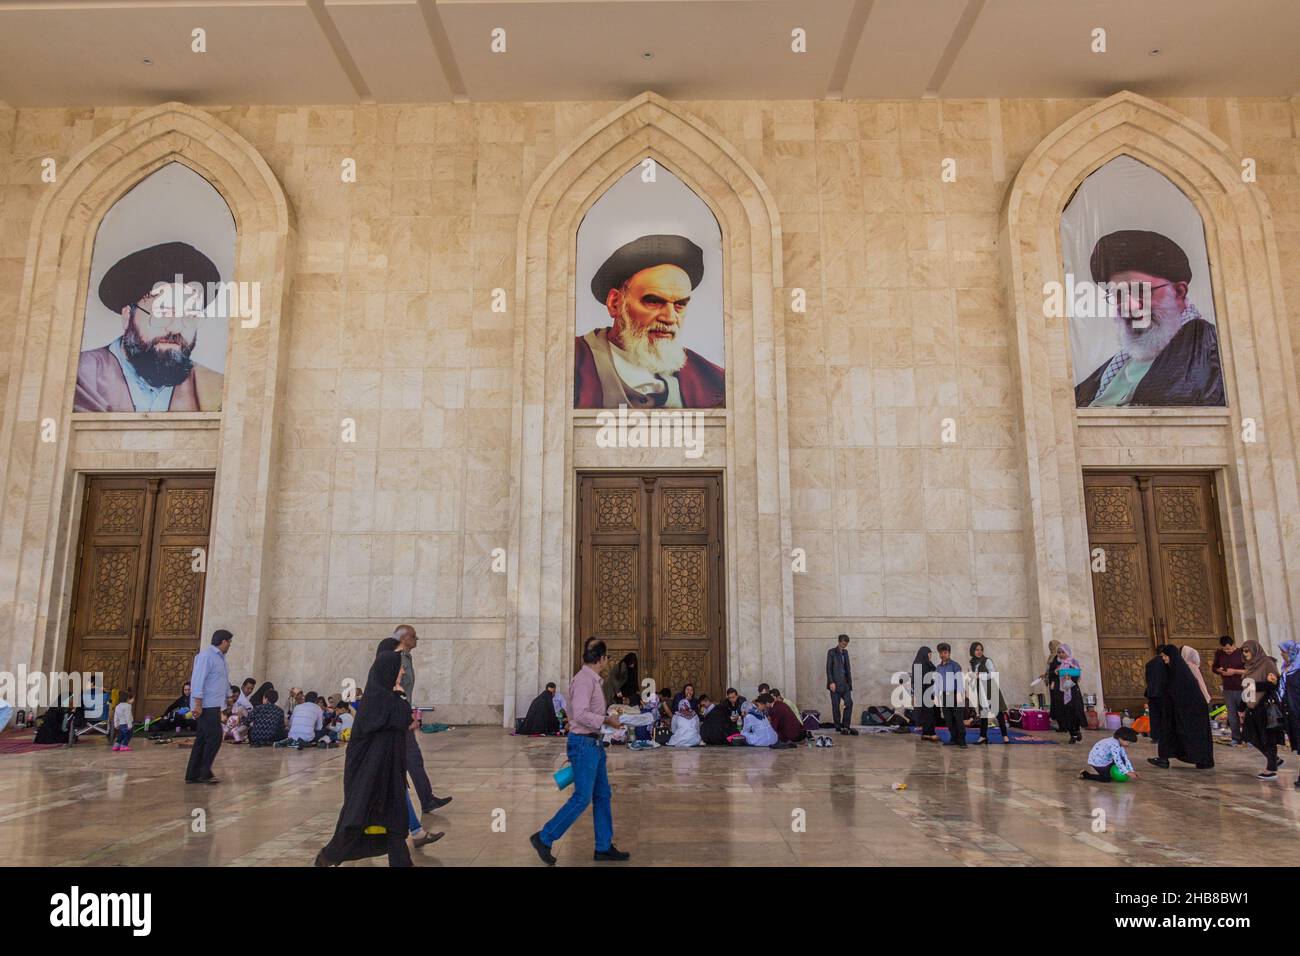 TEHRAN, IRAN - APRIL 2, 2018: Wall of Mausoleum of Ruhollah Khomeini near Tehran. Portraits of Ayatollah Khomeini, Ahmad Khomeini and Ali Khamenei. Stock Photo